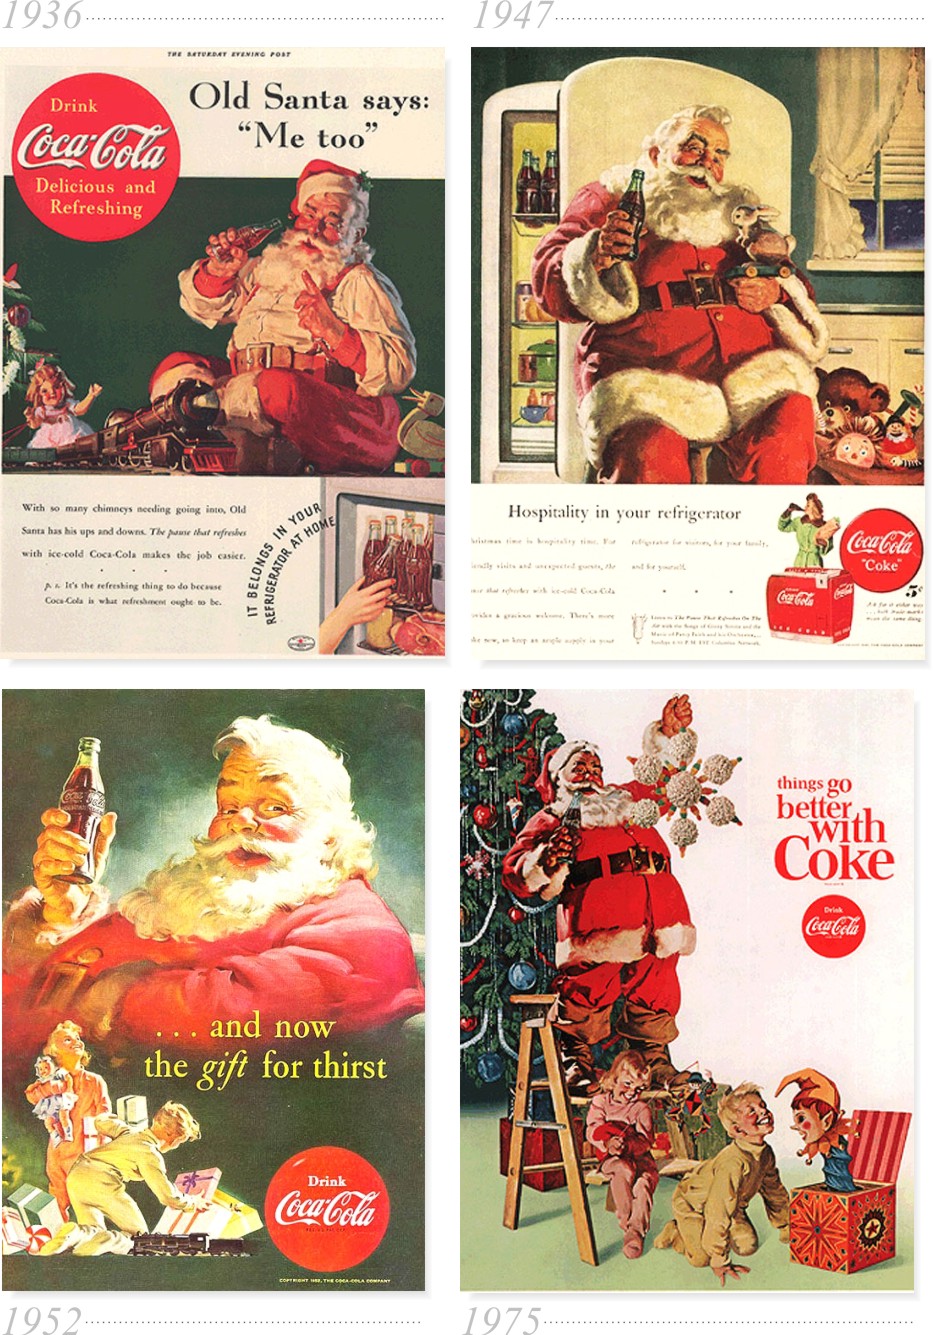 MENSCH ESPECIAL: Coca-Cola natalina - A publicidade de Natal ao longo dos  anos - Revista Mensch